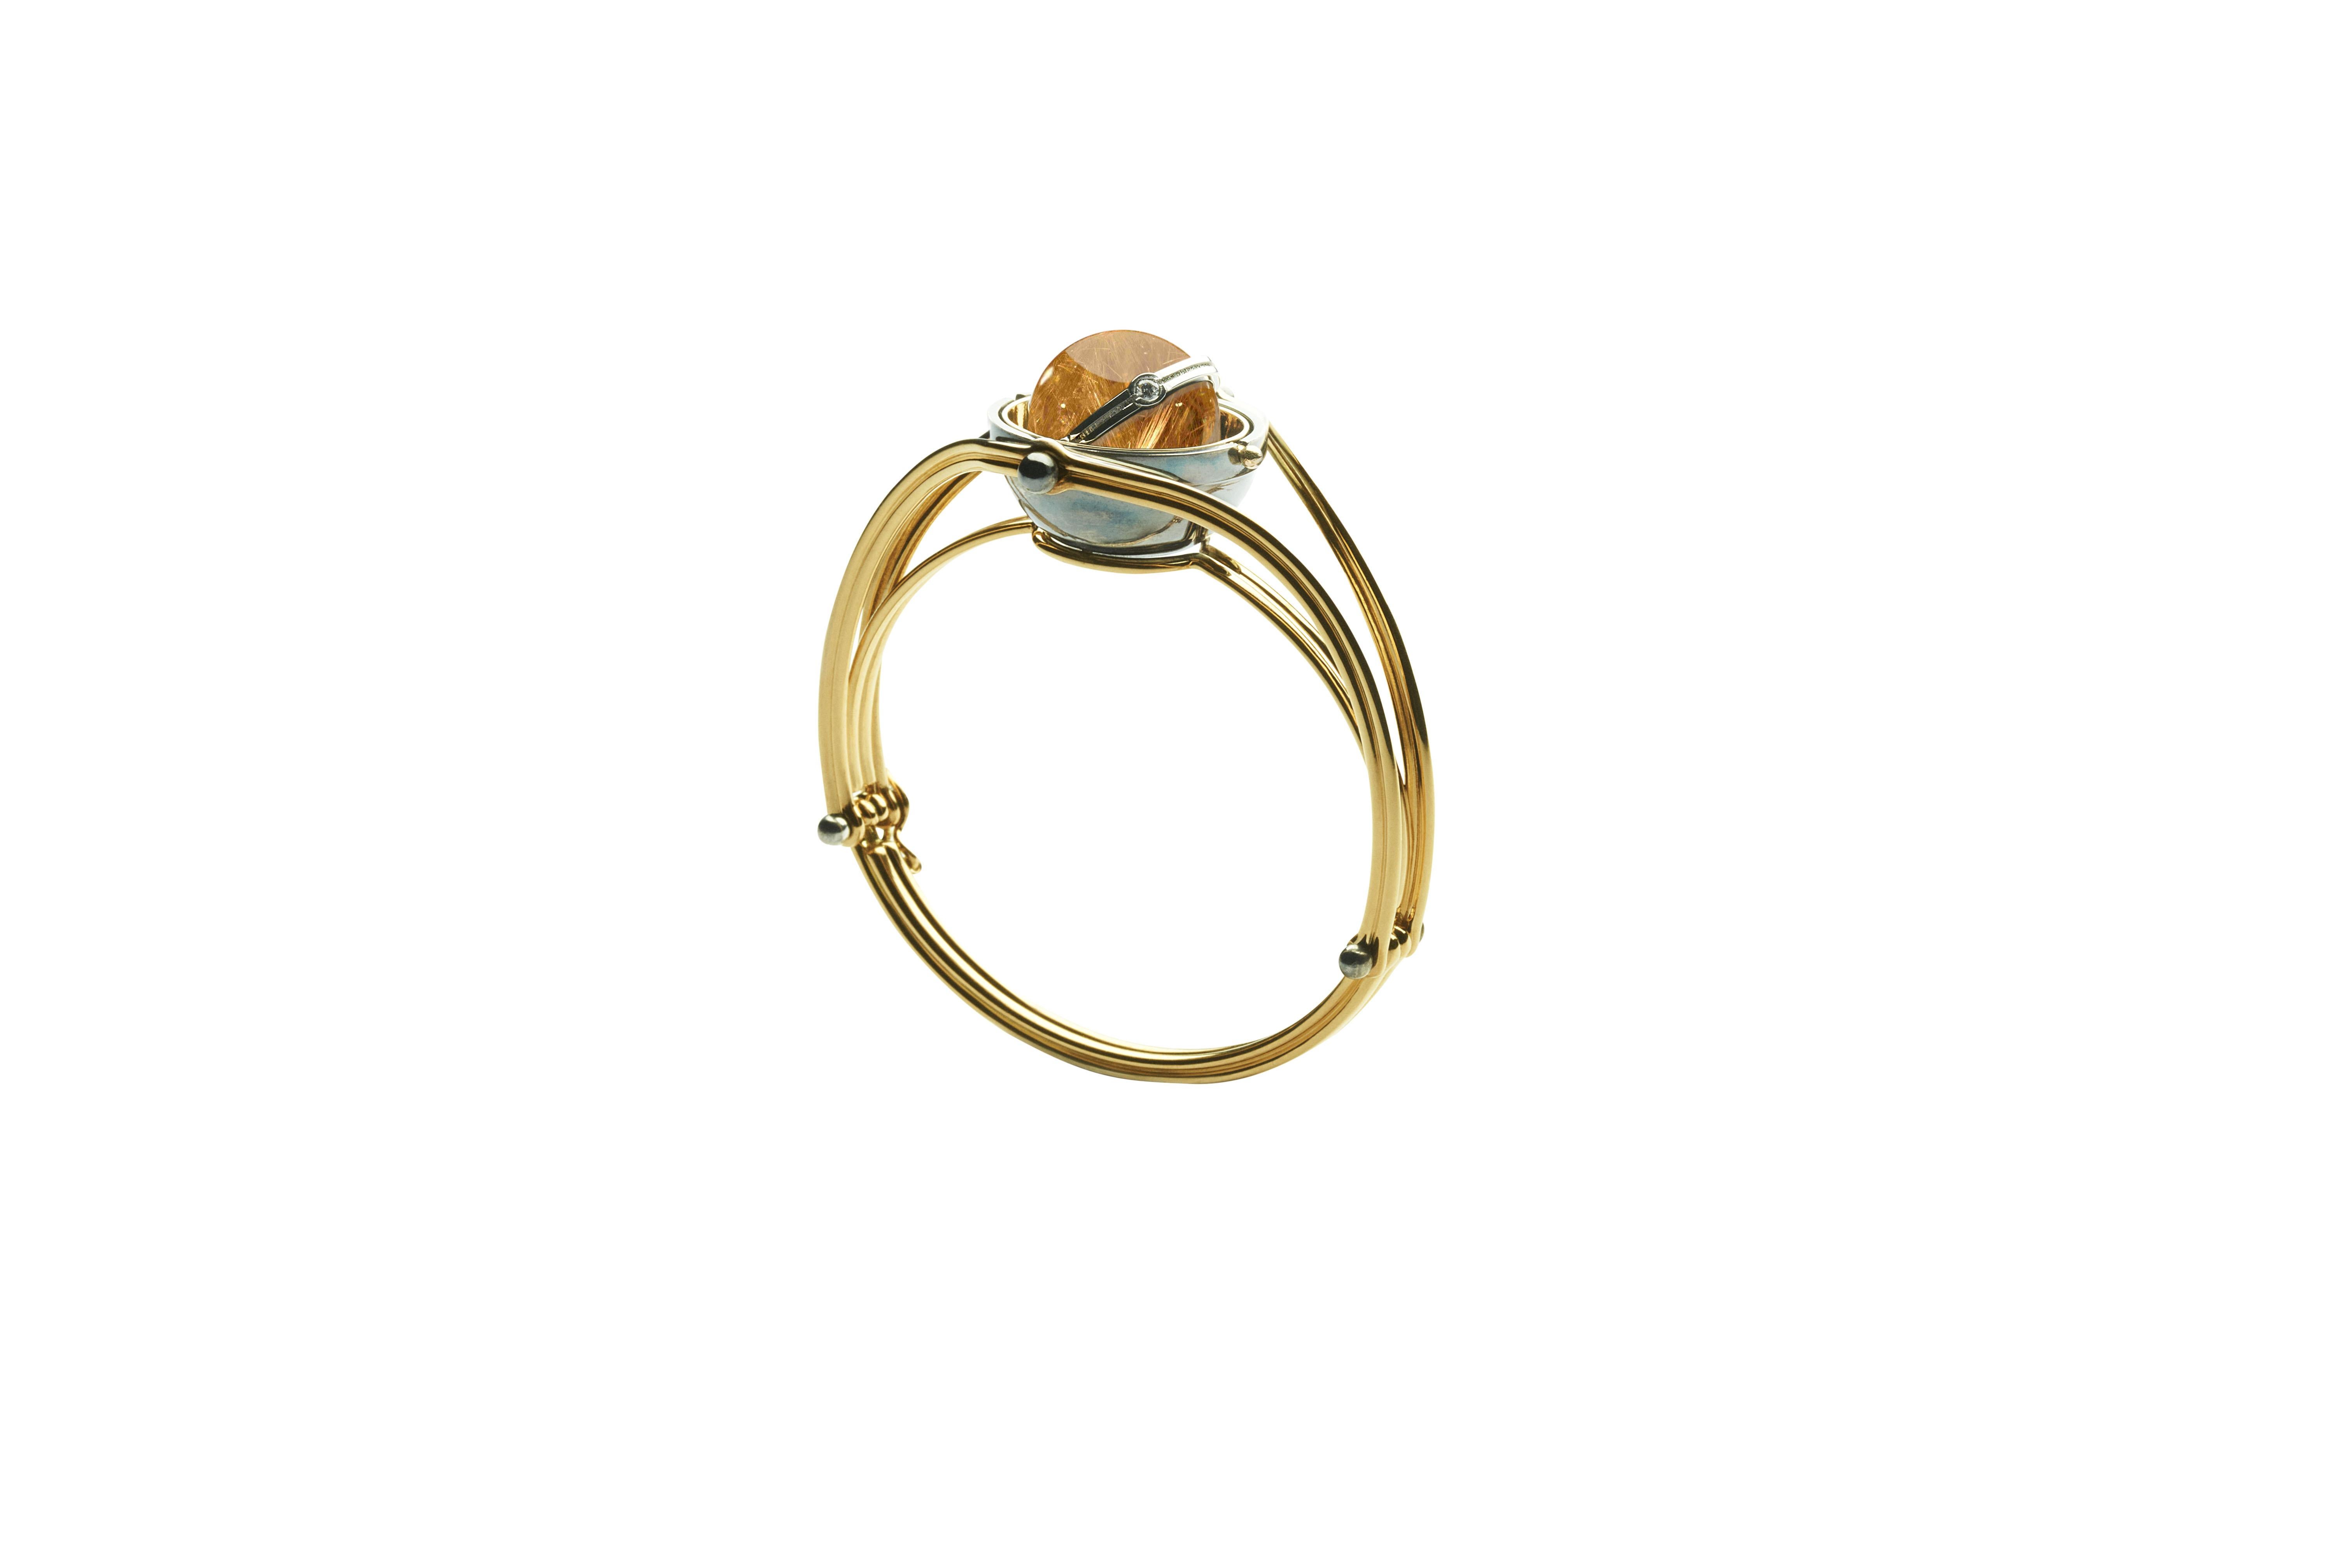 Neoclassical Diamonds Quartz Sphere Bracelet in 18k yellow gold by Elie Top